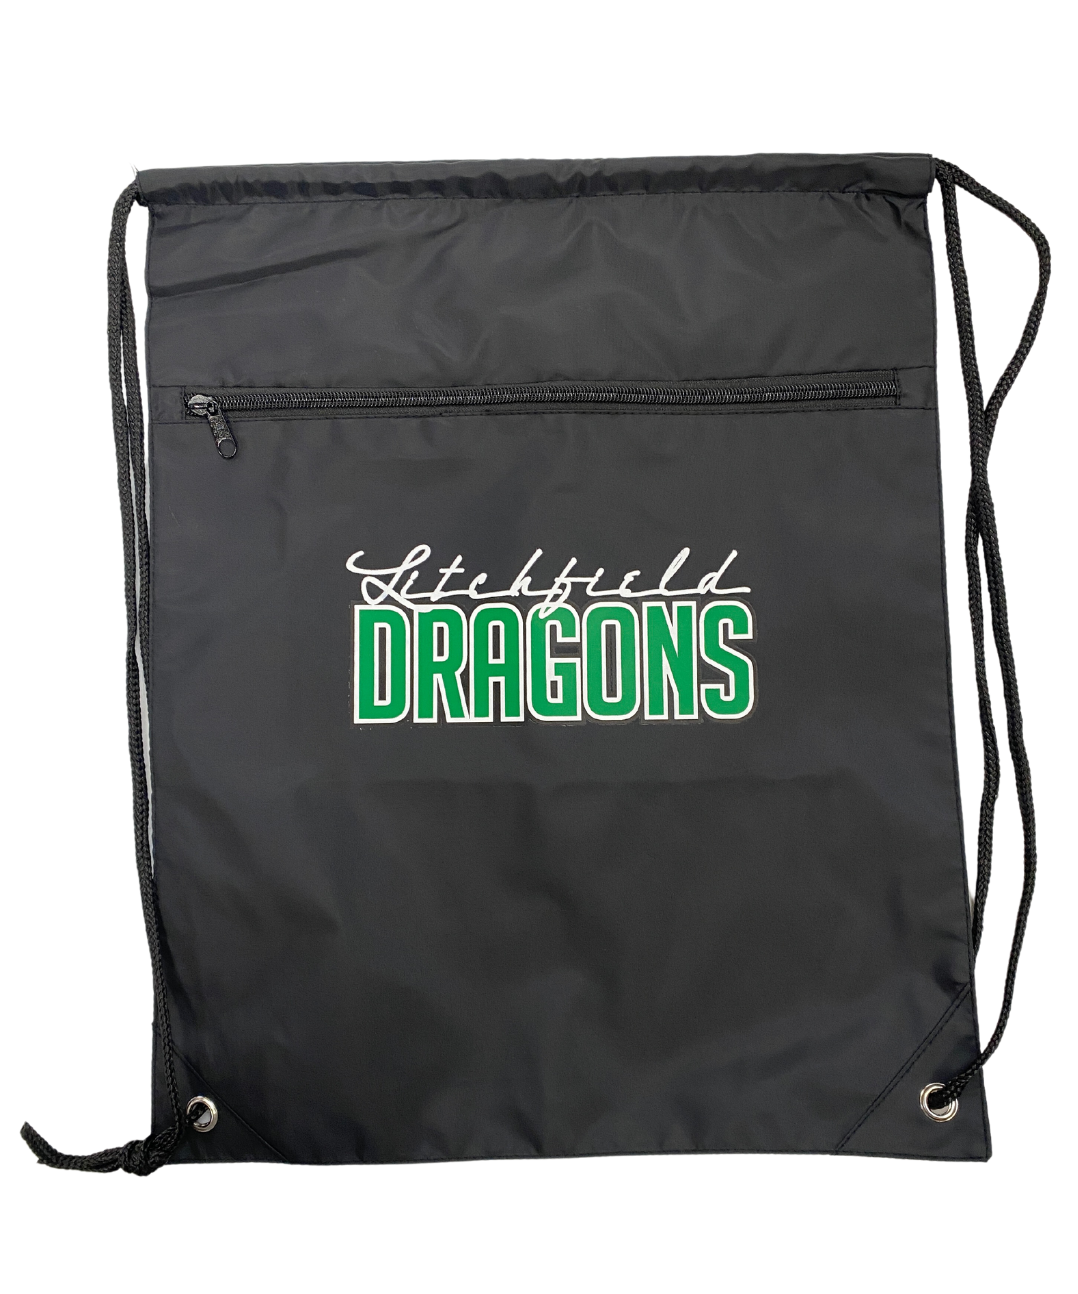 Lfd Dragon Belair Cinch Bag